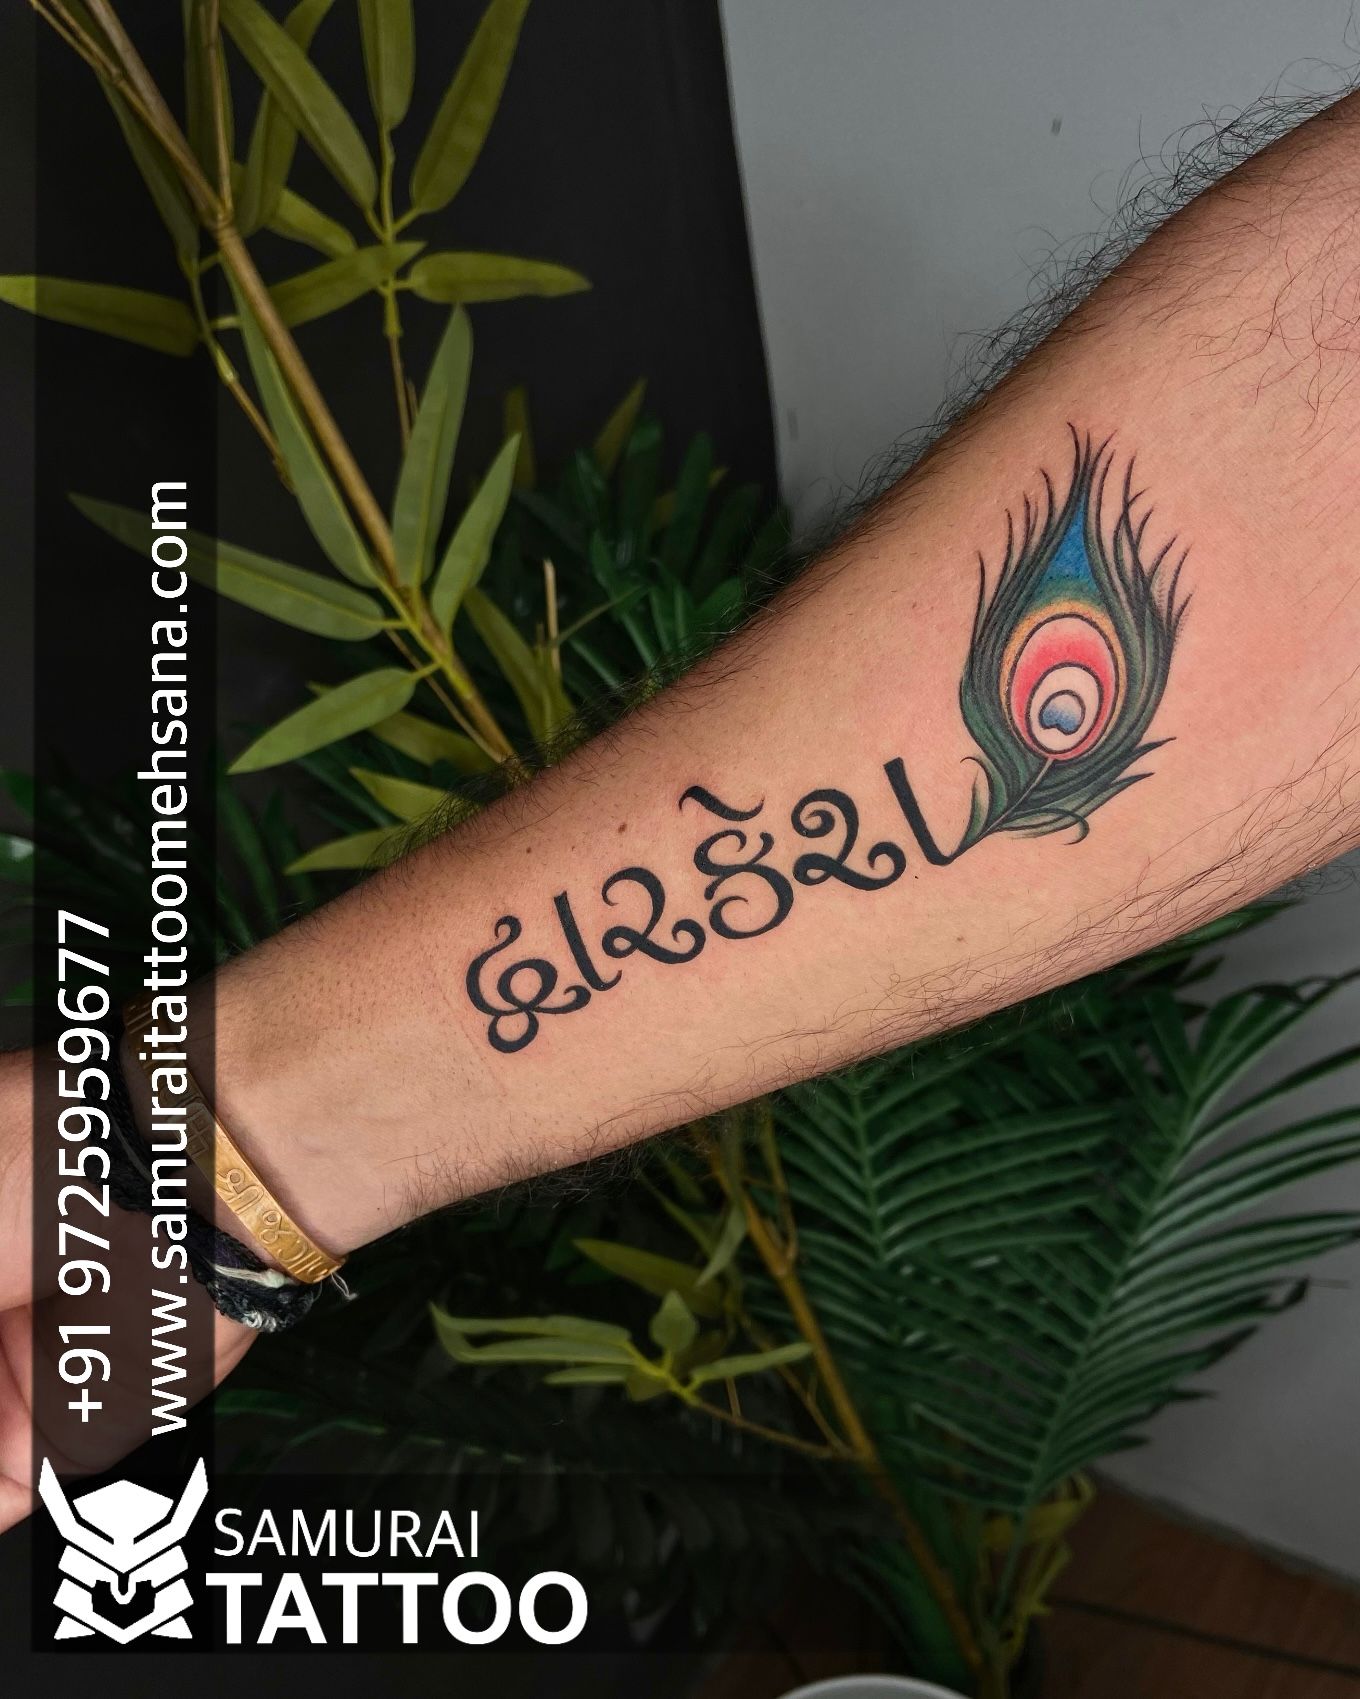 Shri Krishna name tattoo with flute and feather  radhe krishna tattoo   feather tattoo  YouTube